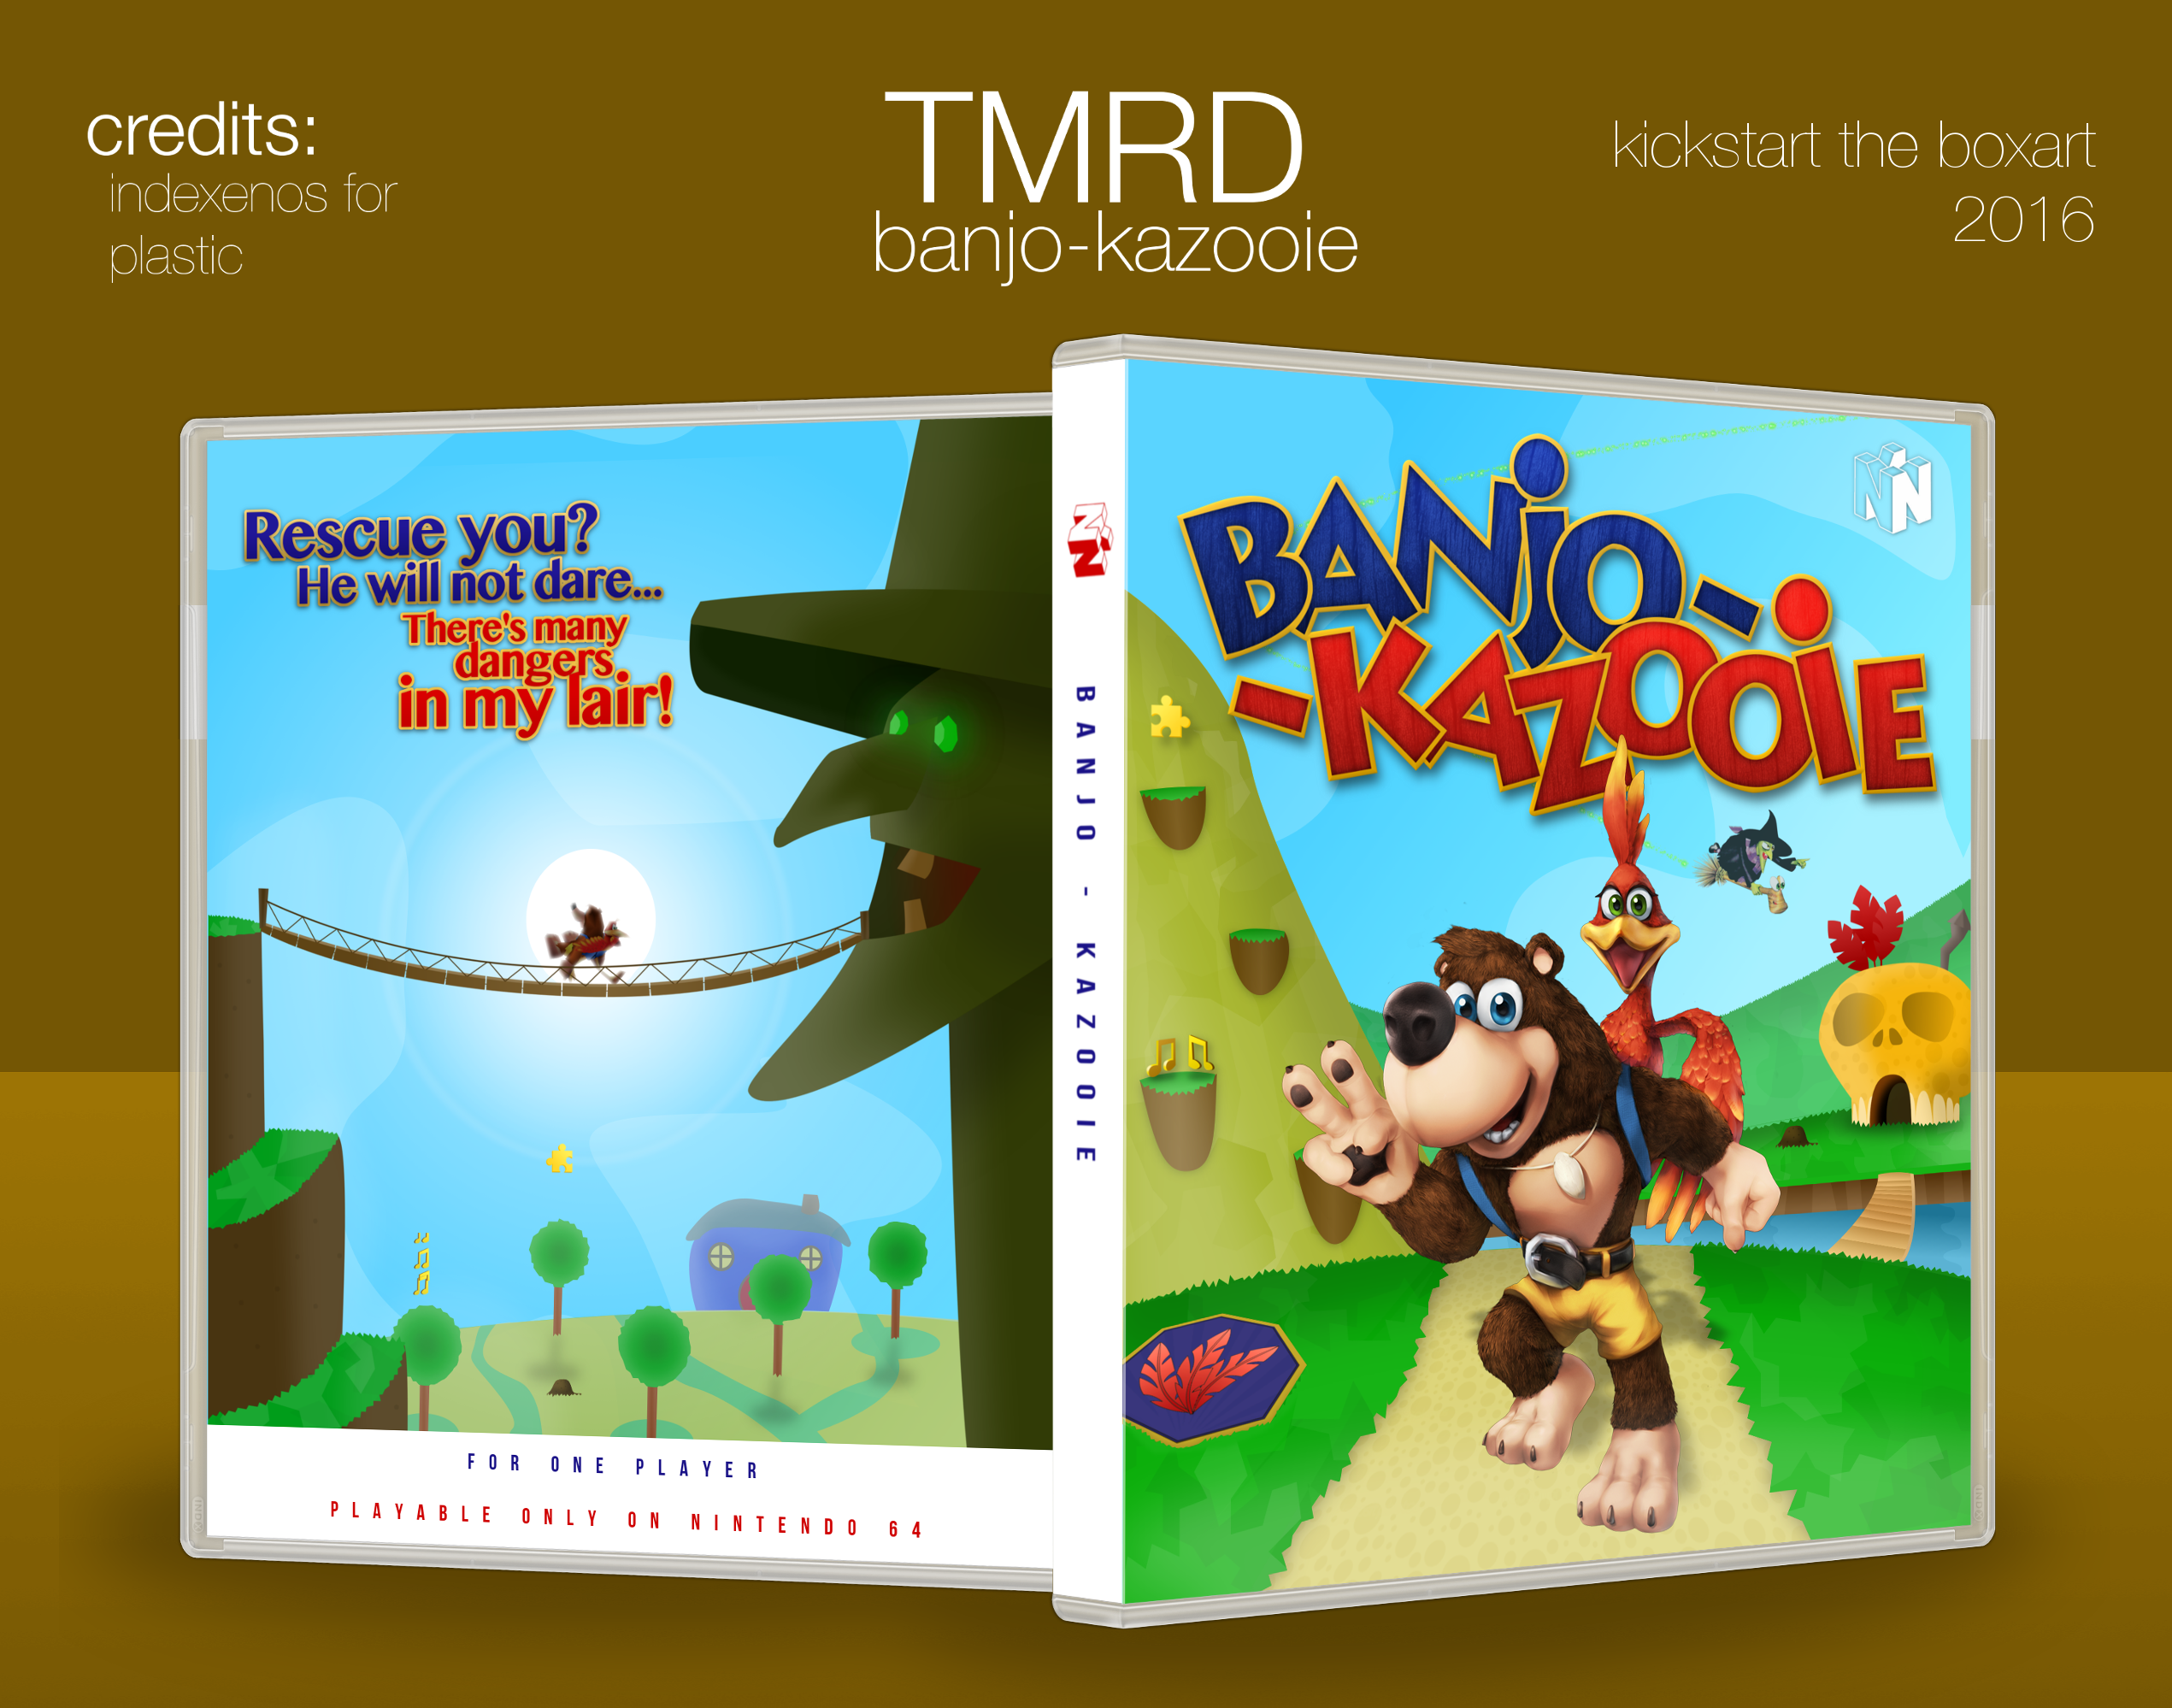 Banjo-Kazooie - Boxed - Great - Nintendo 64